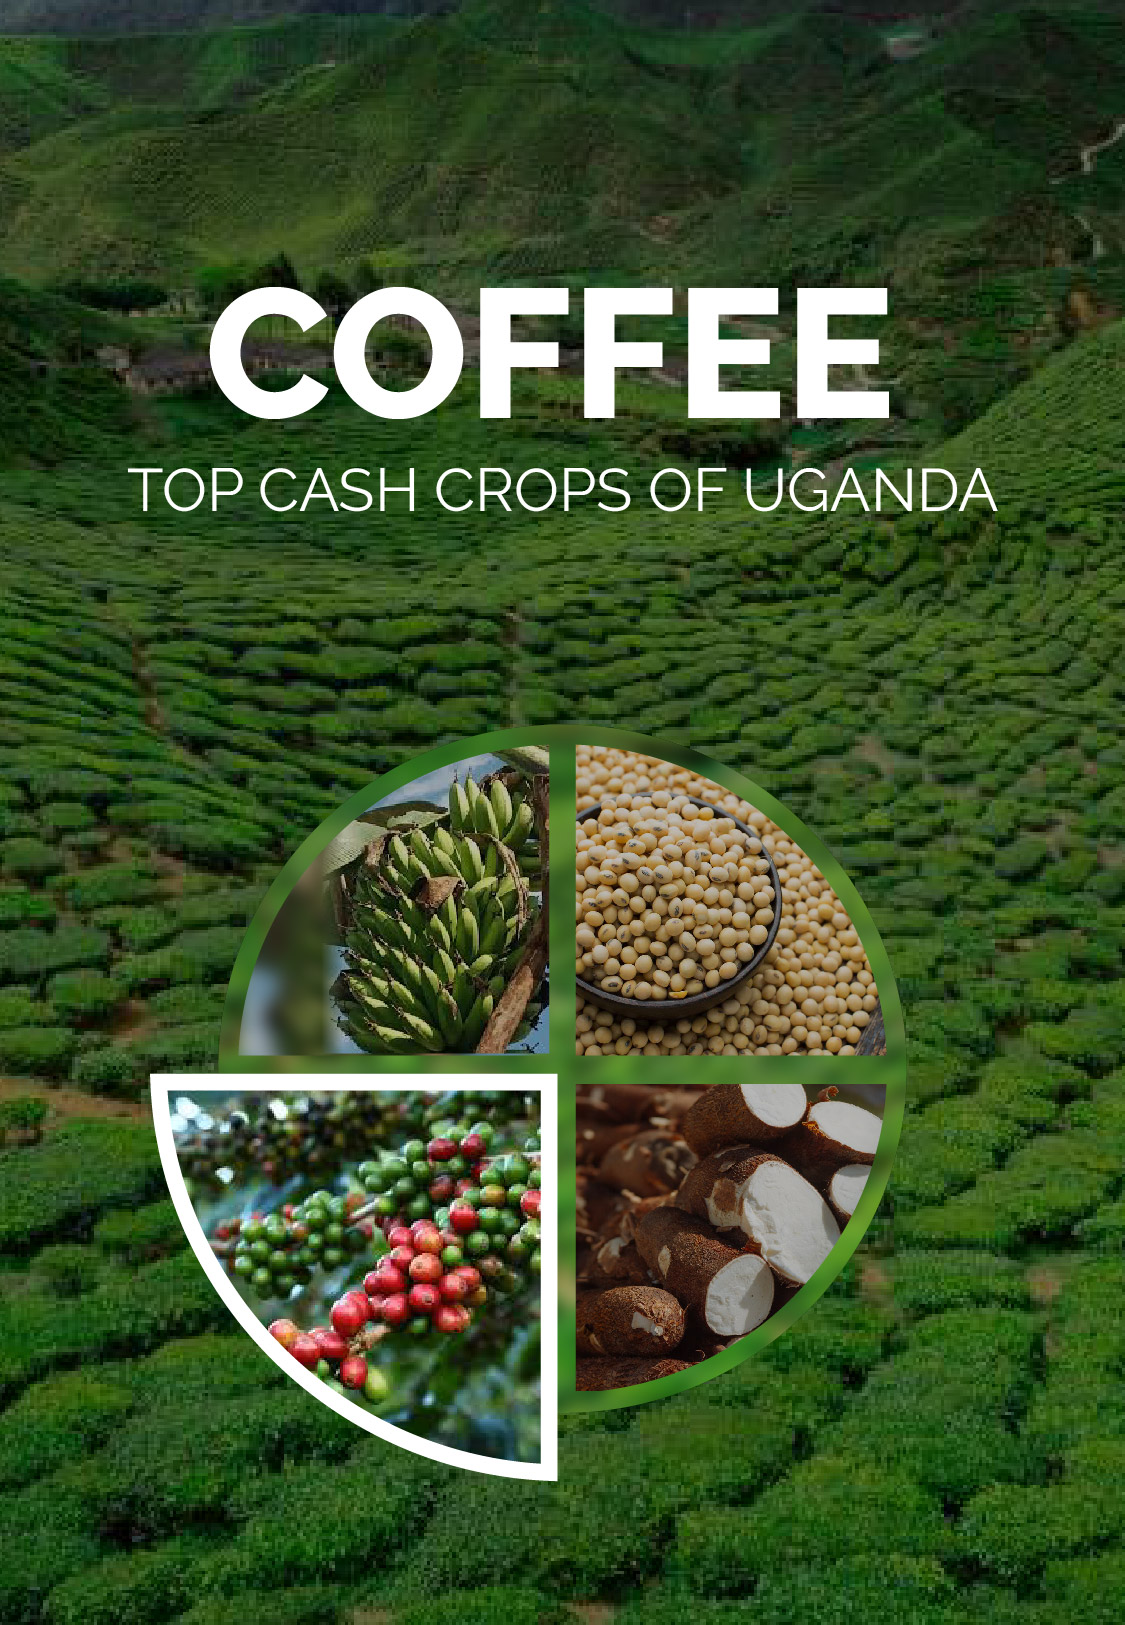 Top cash crops of Uganda (coffee)